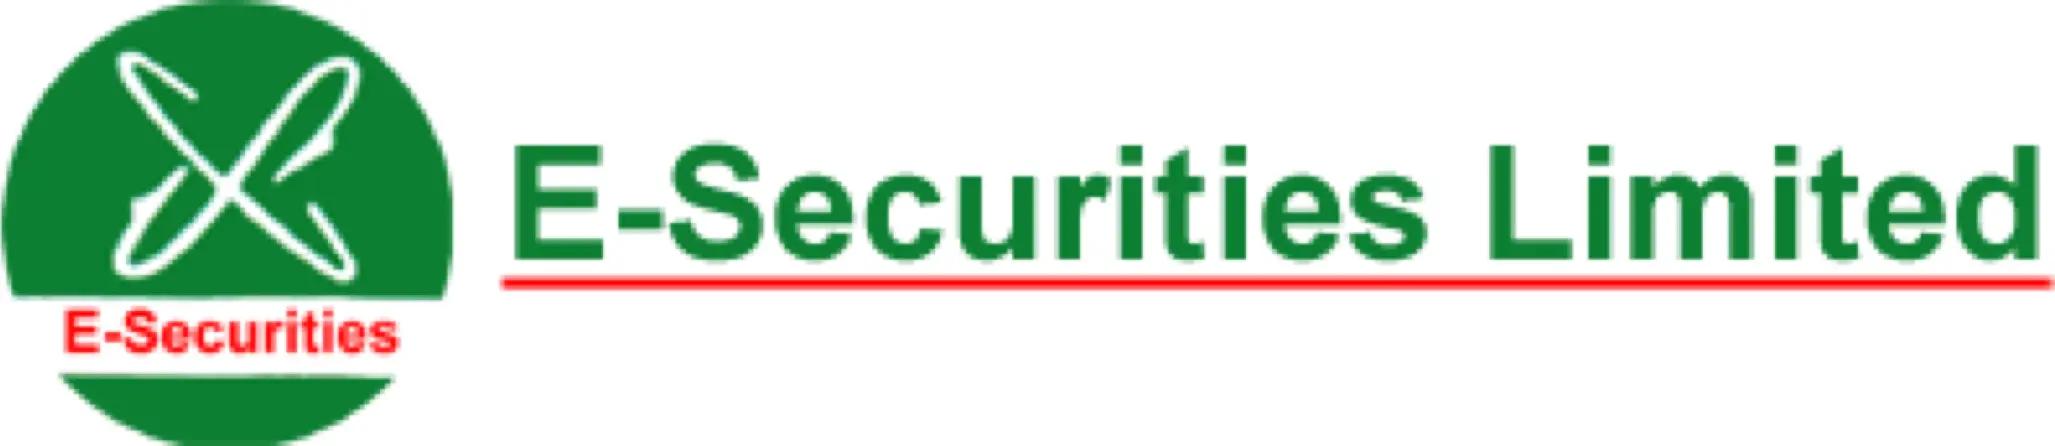 E-Securities